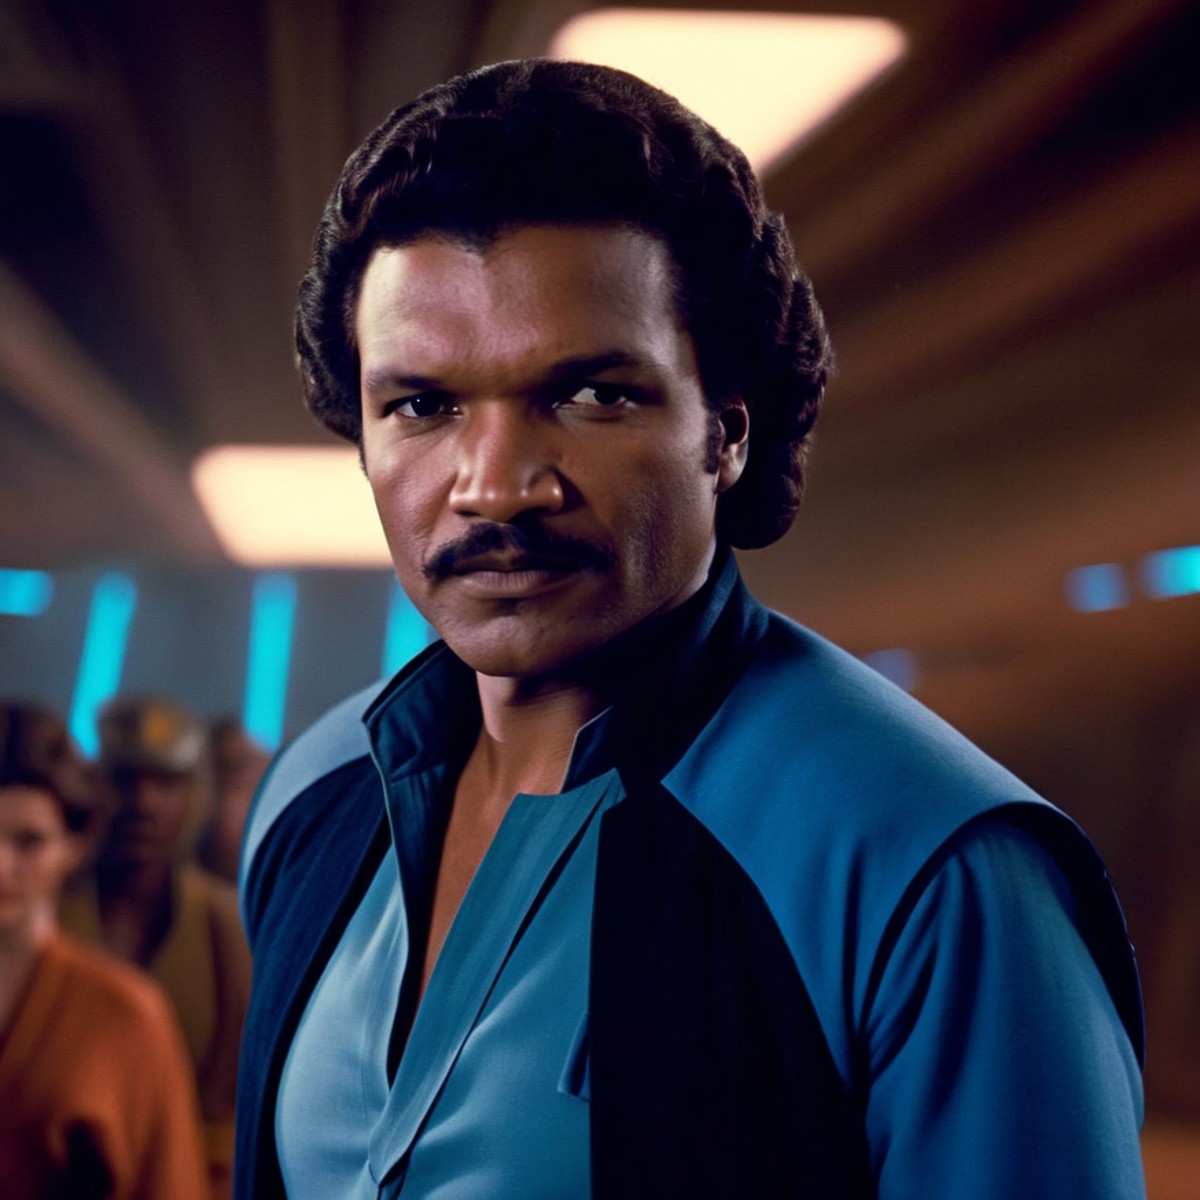 cinematic film still of  <lora:Lando Calrissian:1.2>
Lando Calrissian a man in a blue shirt and black pants in star wars u...